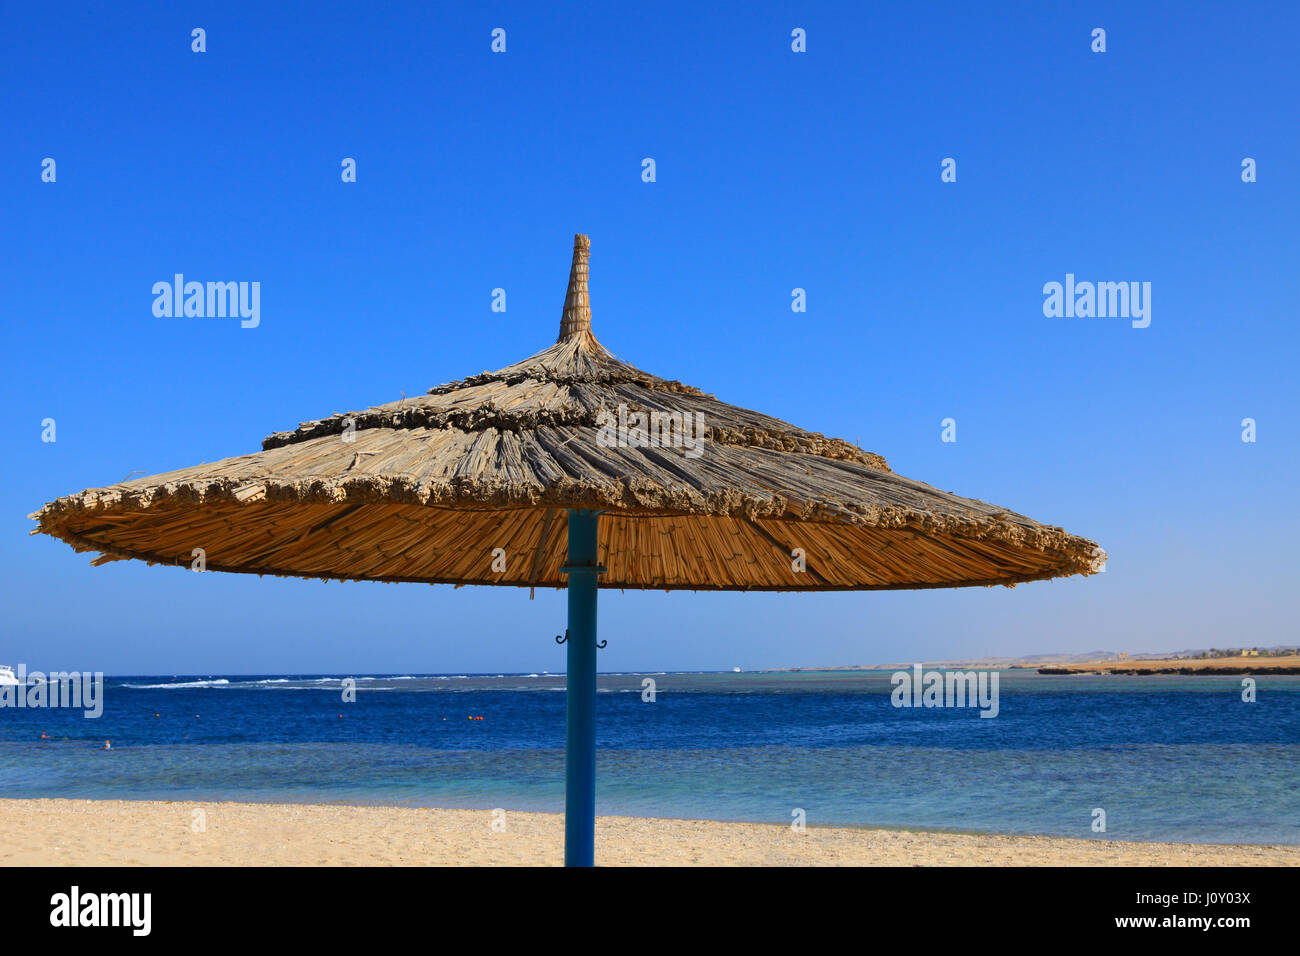 Ägyptische Sonnenschirm am Strand des Roten Meeres. Port Ghalib, Ägypten. Stockfoto